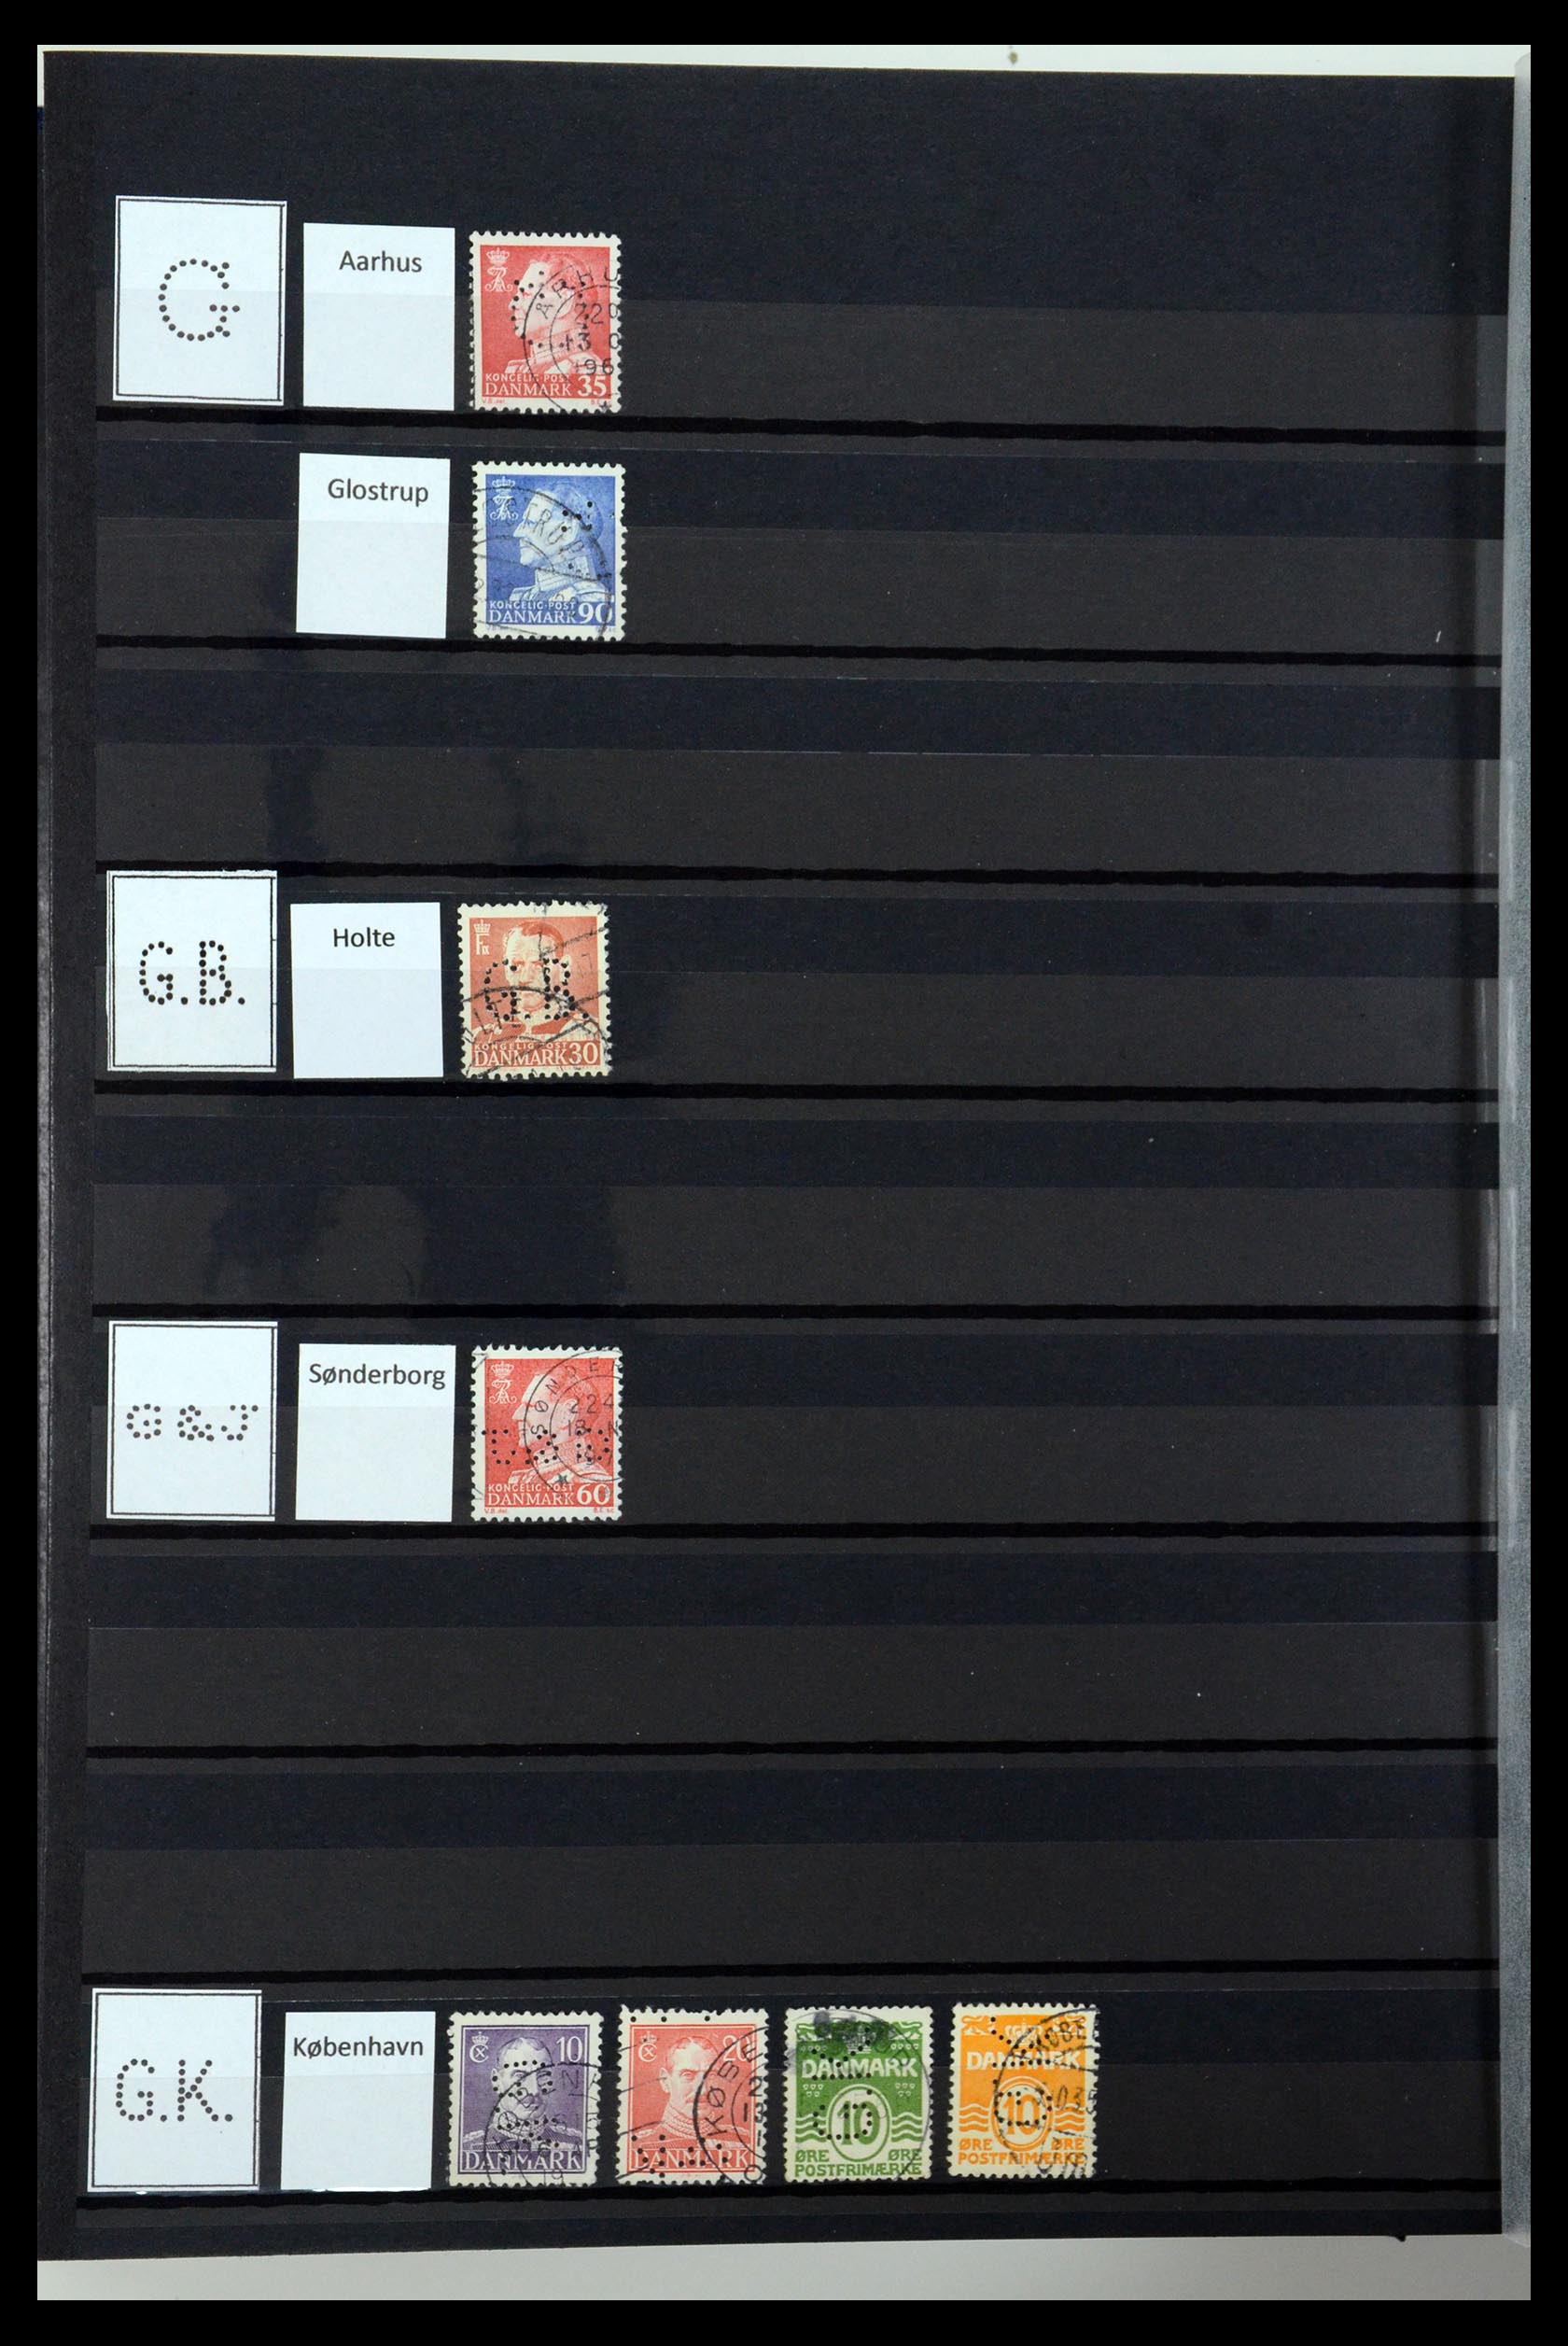 36396 078 - Stamp collection 36396 Denmark perfins.